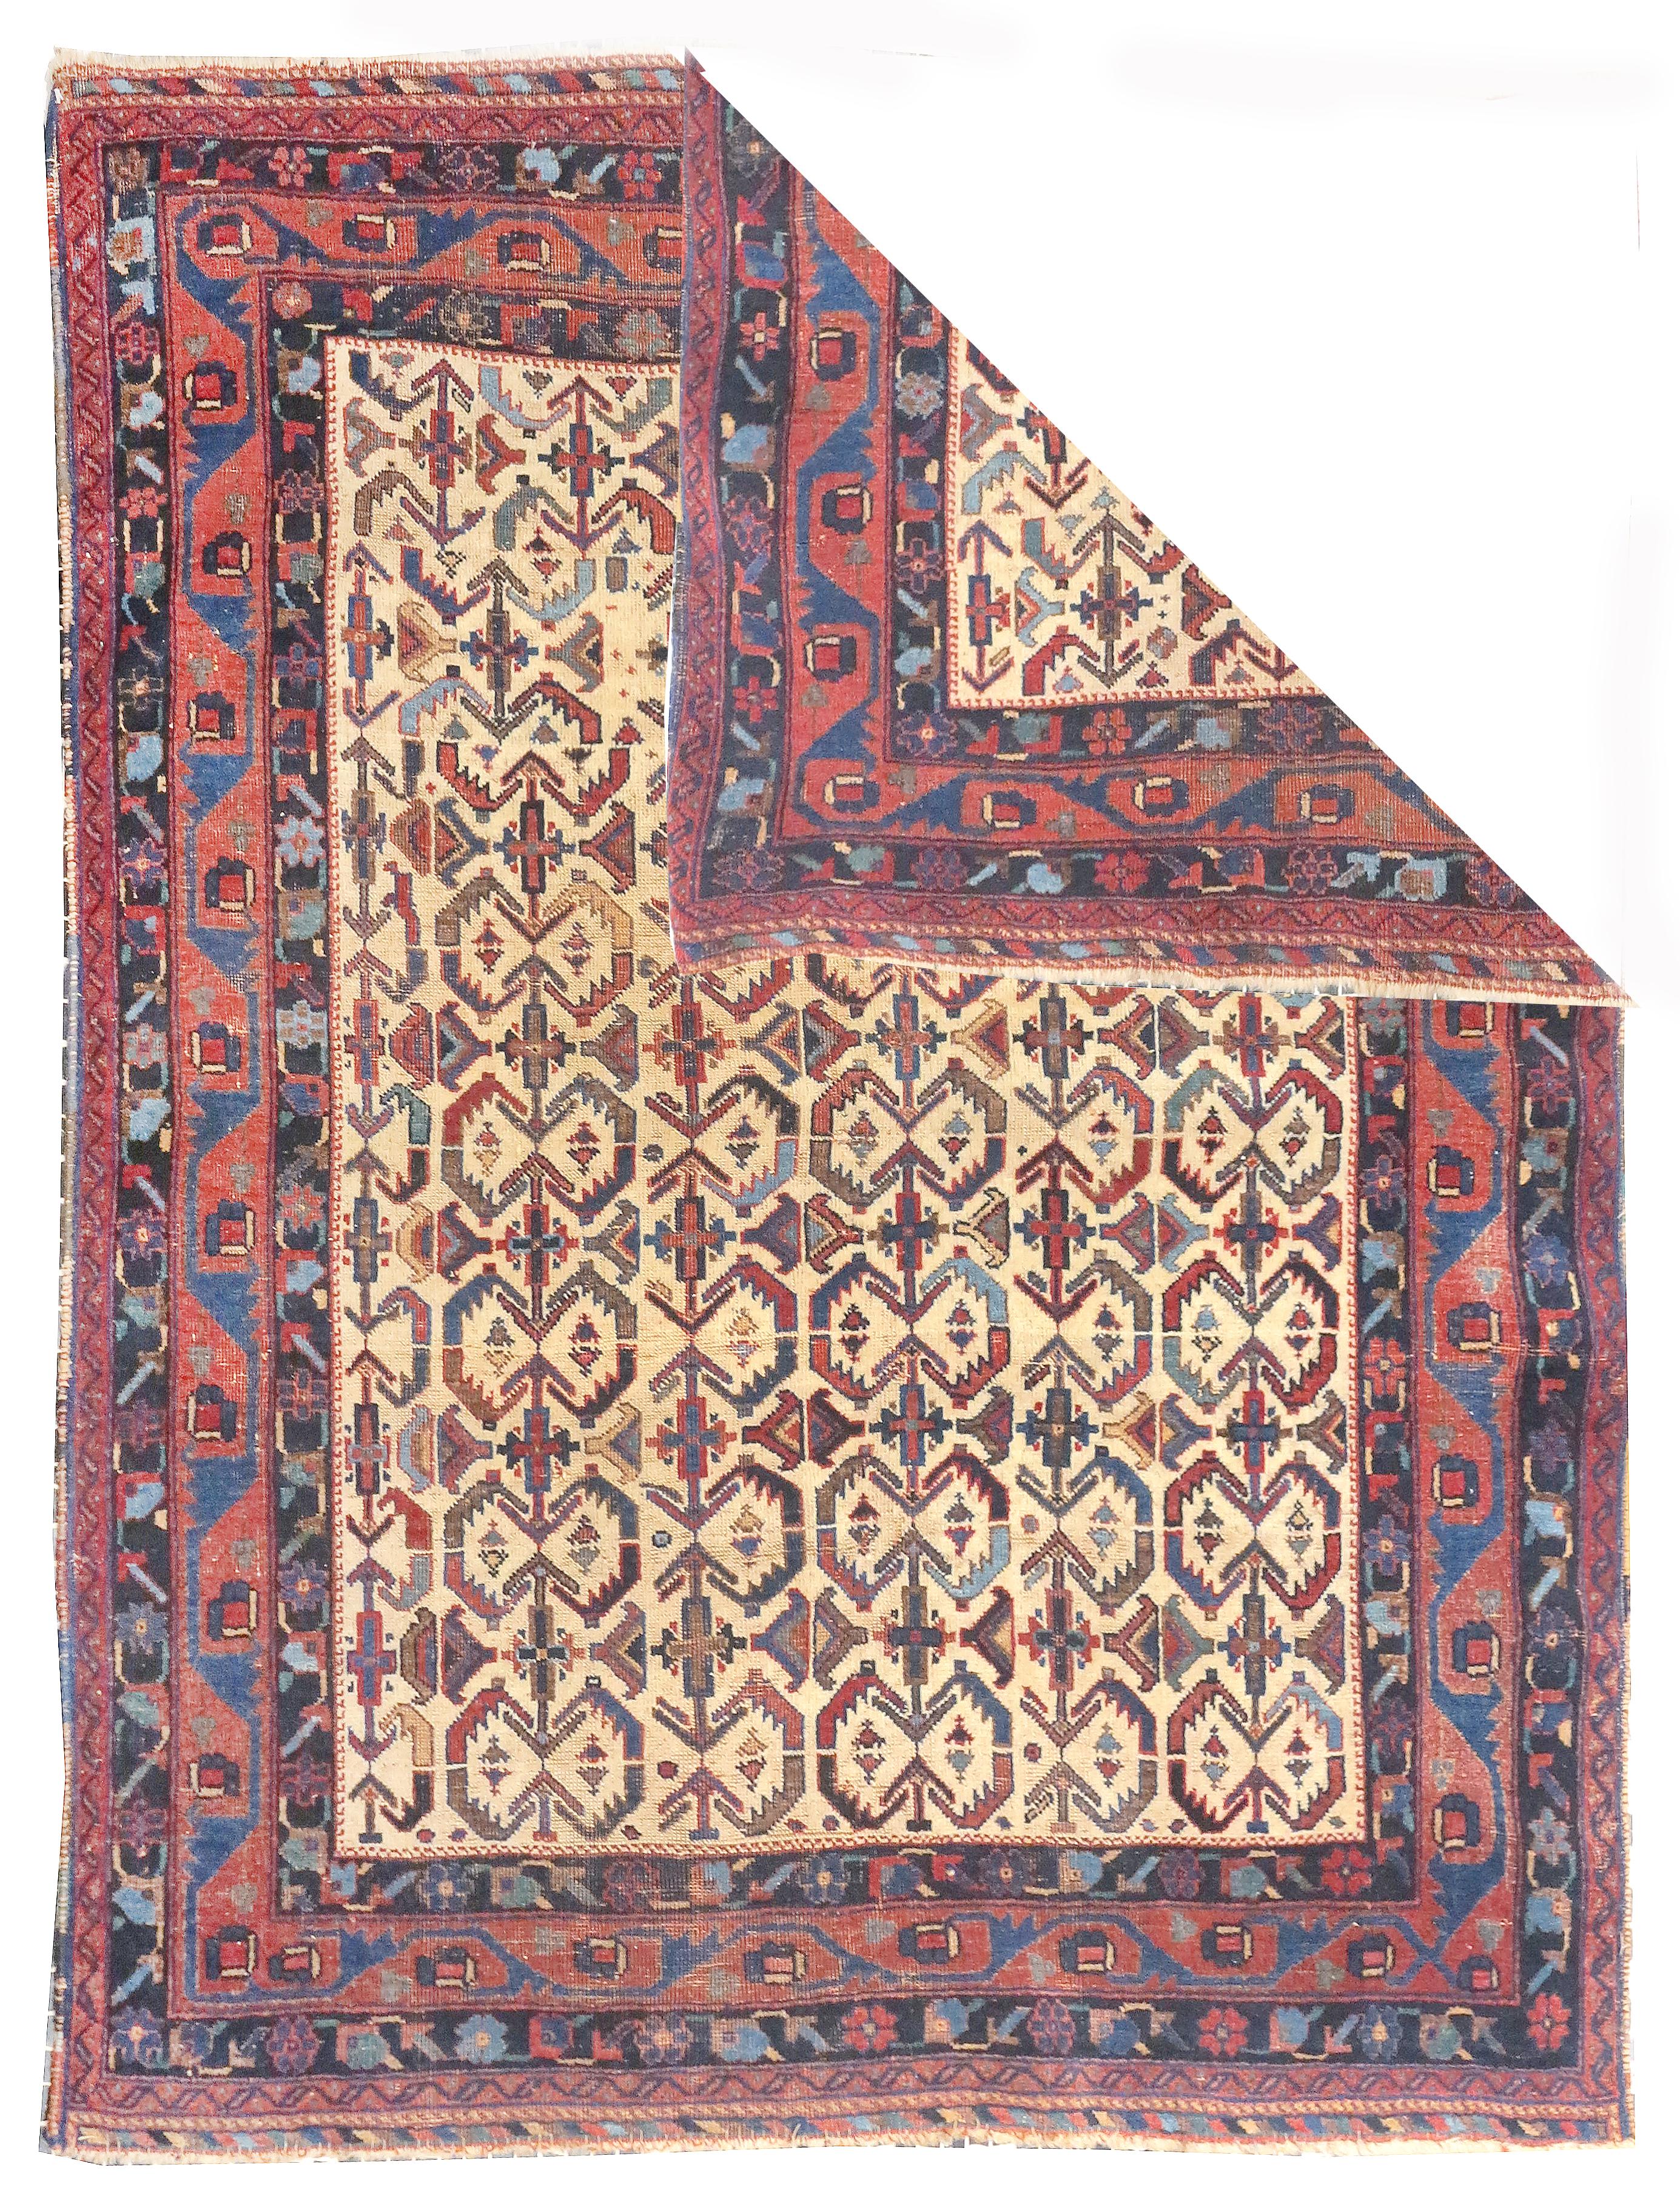 Tapis antique persan tribal Afshar, mesure 4'0'' x 4'6''.